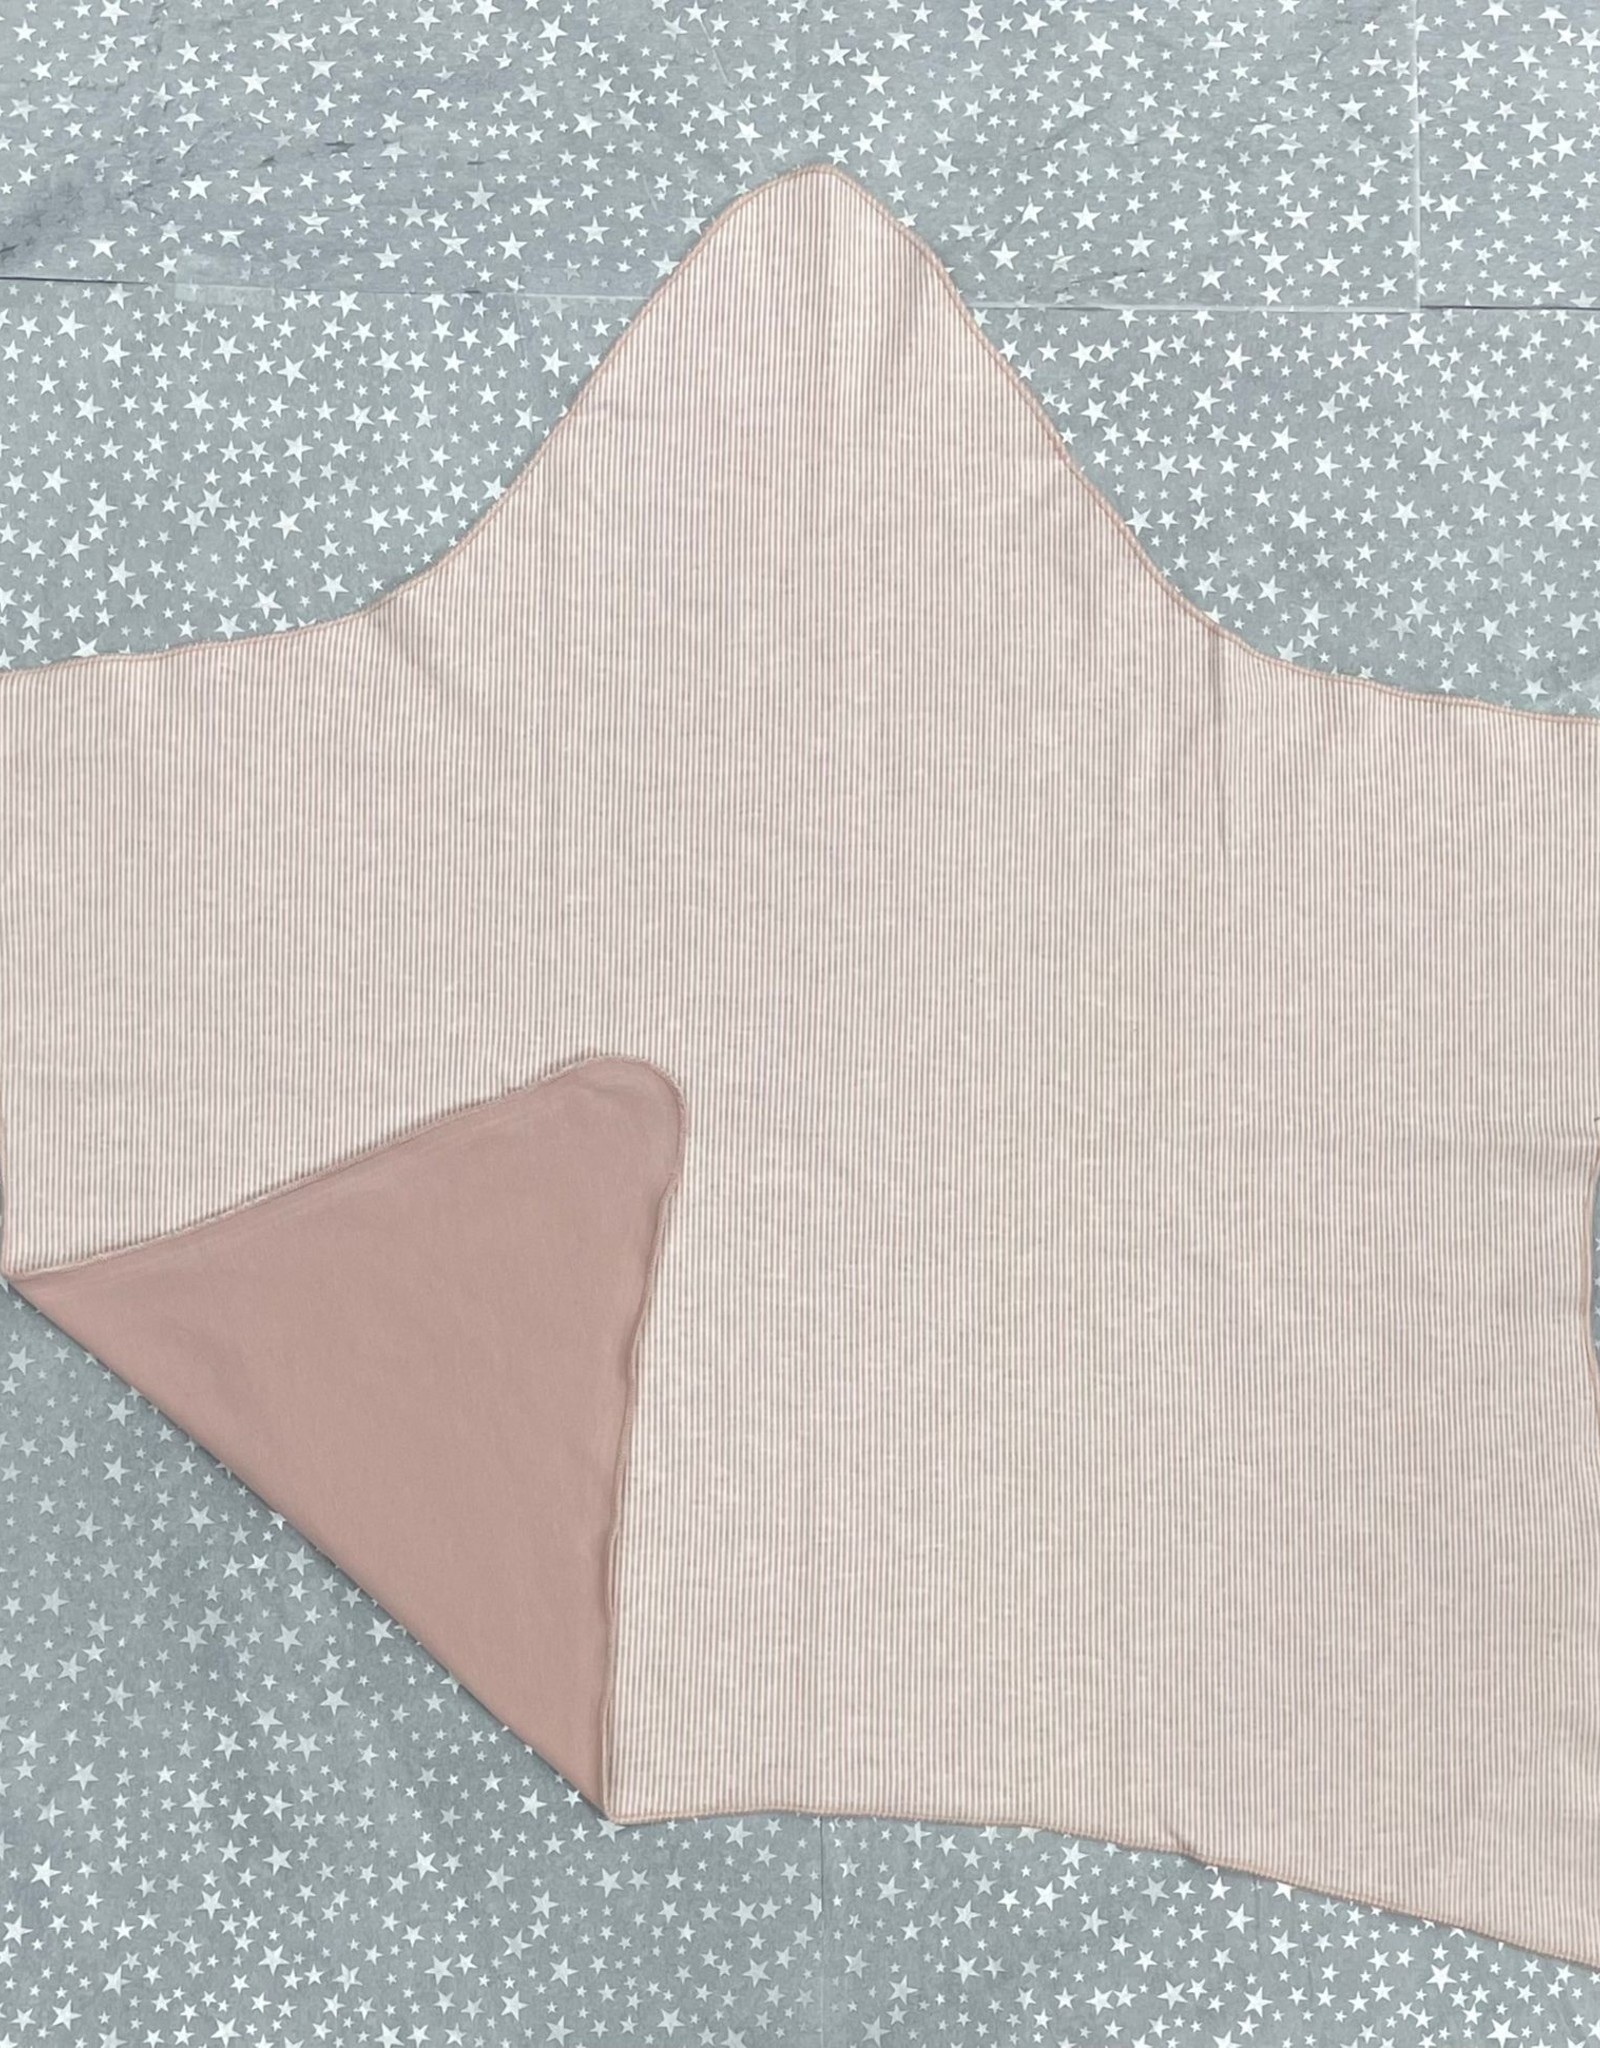 FRAGILE Fragile Thin Ribbed Cotton Star Blanket